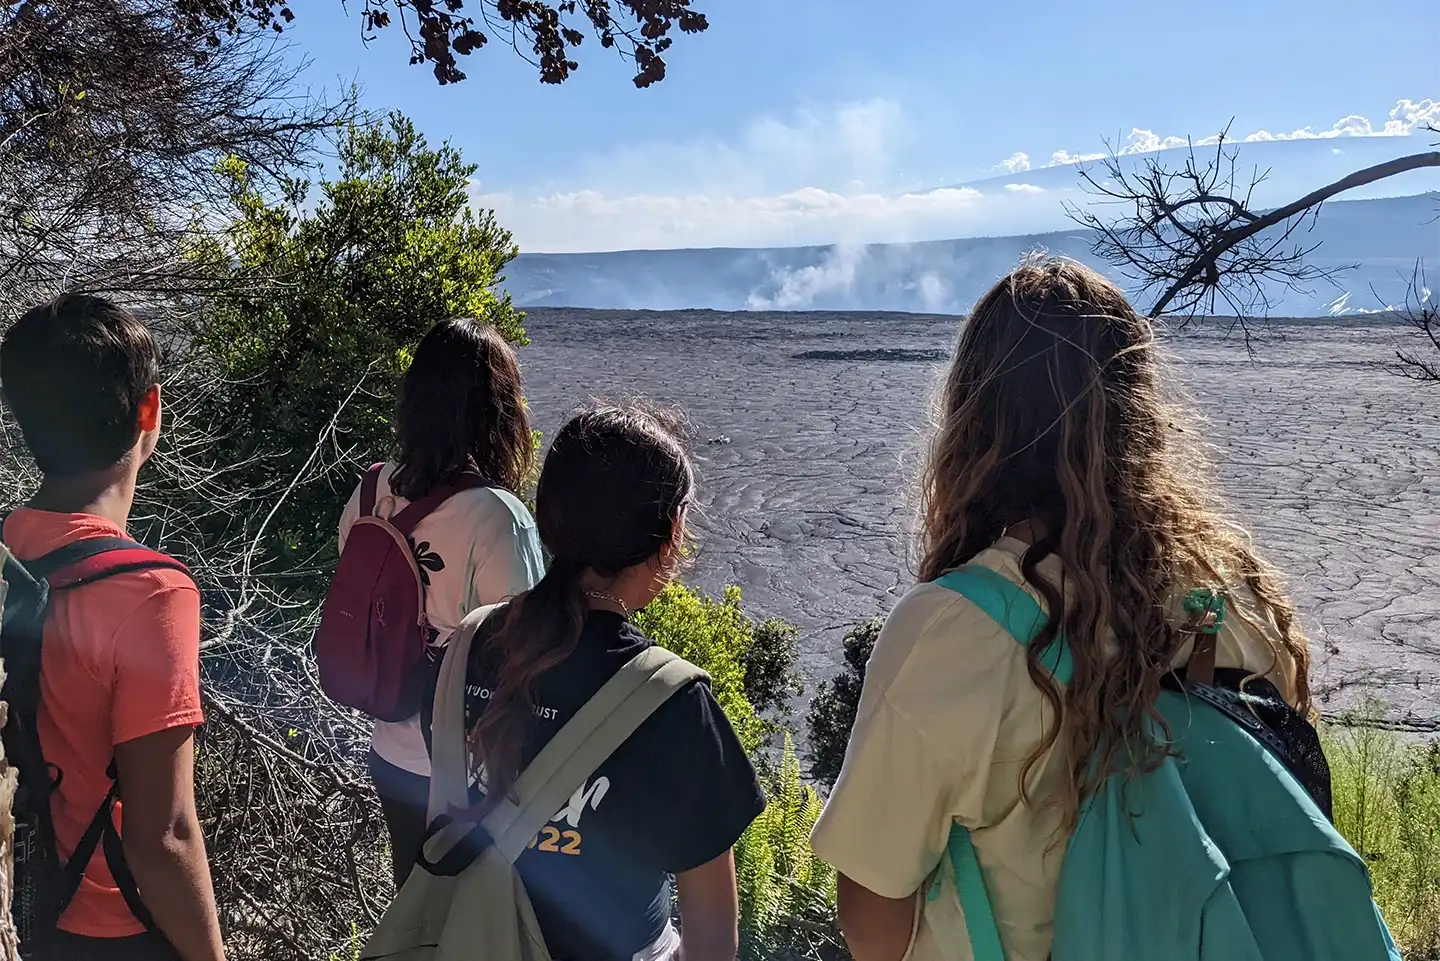 At Kilauea overlooking lava in the volcano's caldera